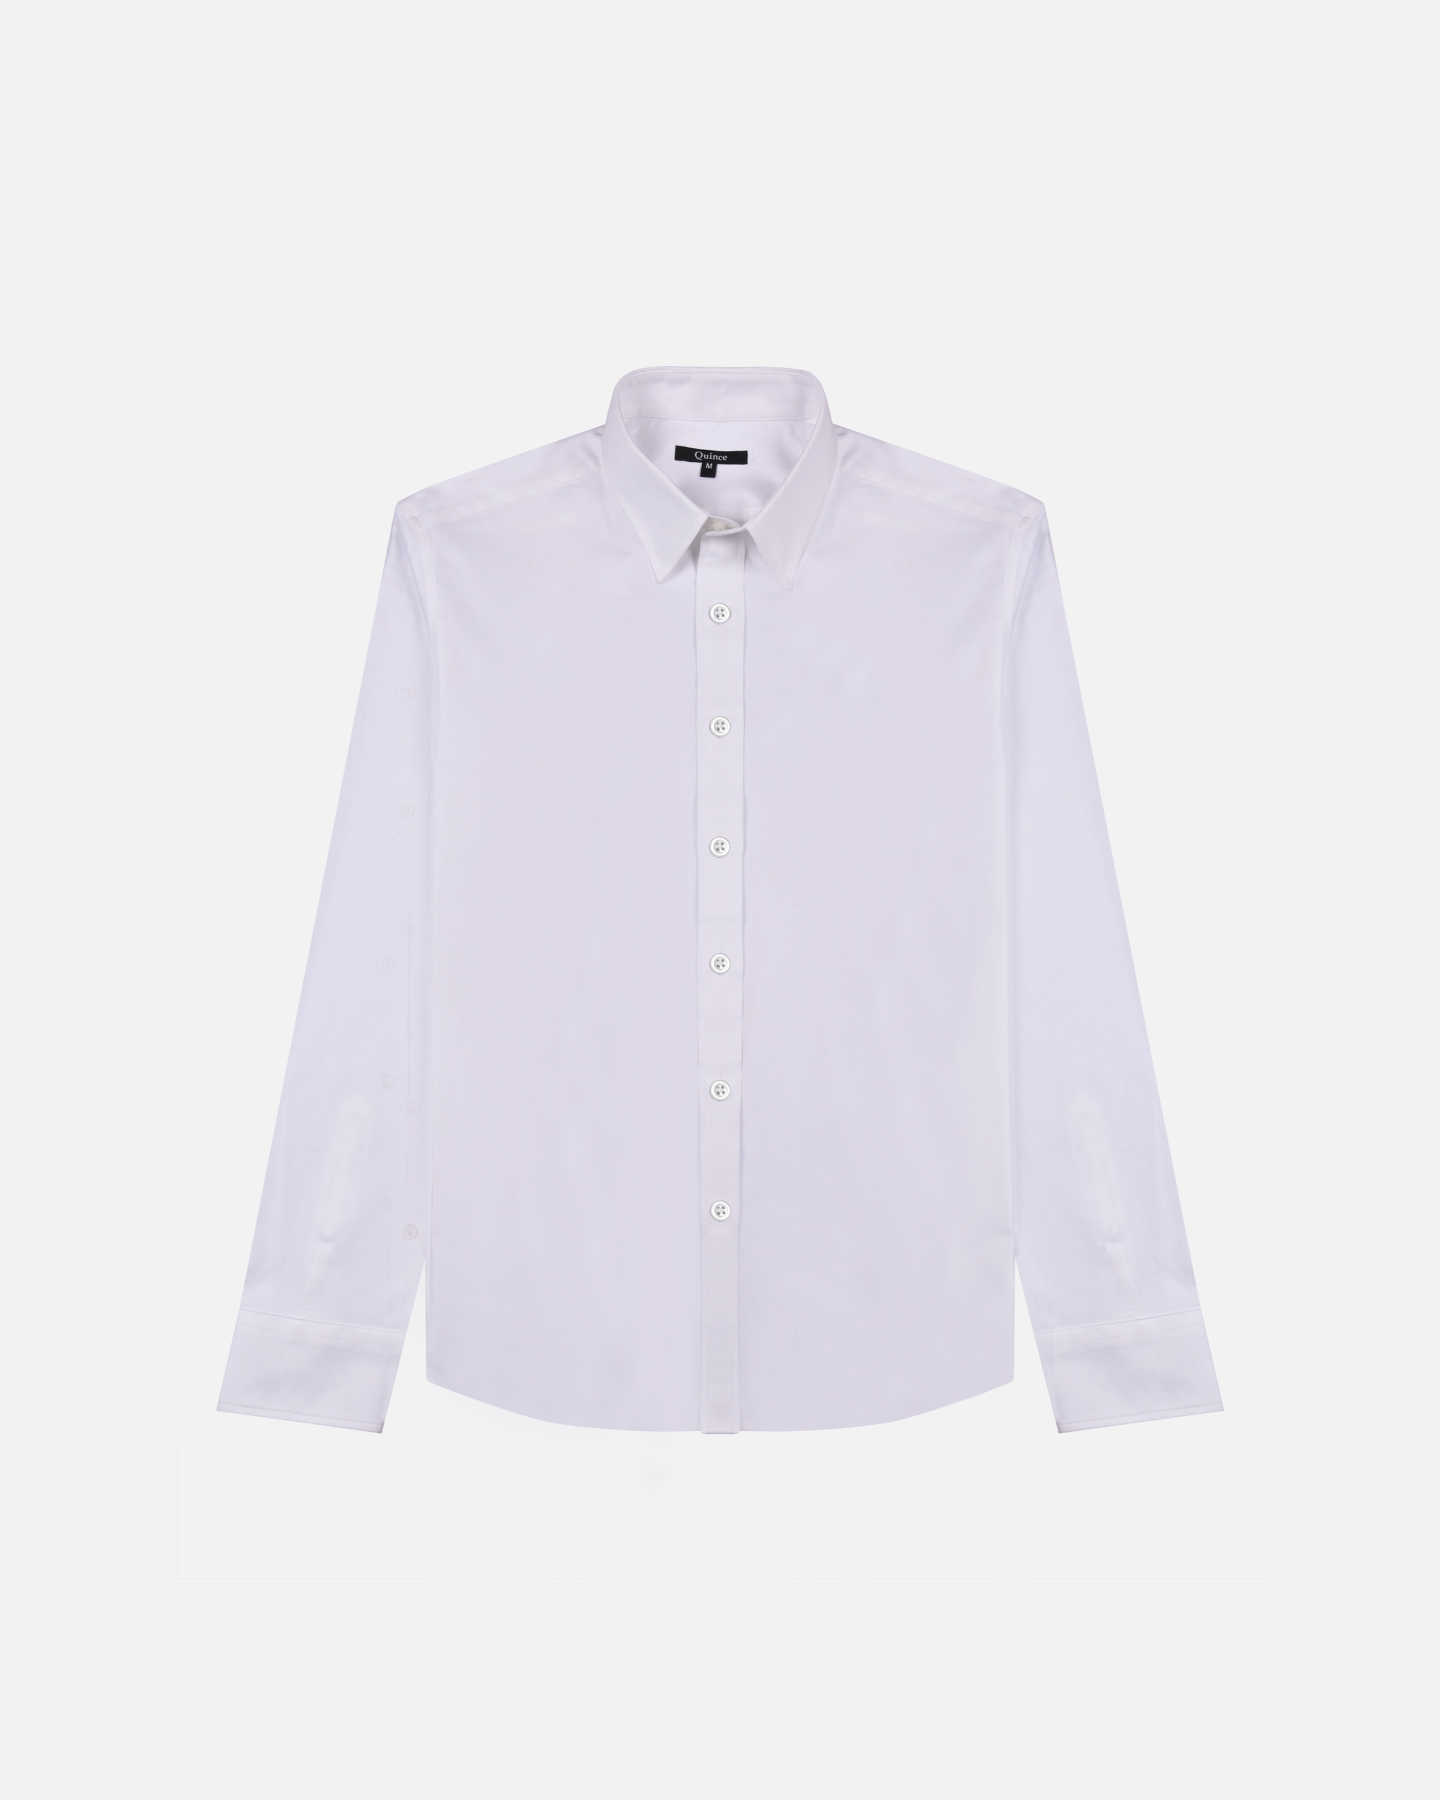 The Untucked Dress Shirt - White - 4